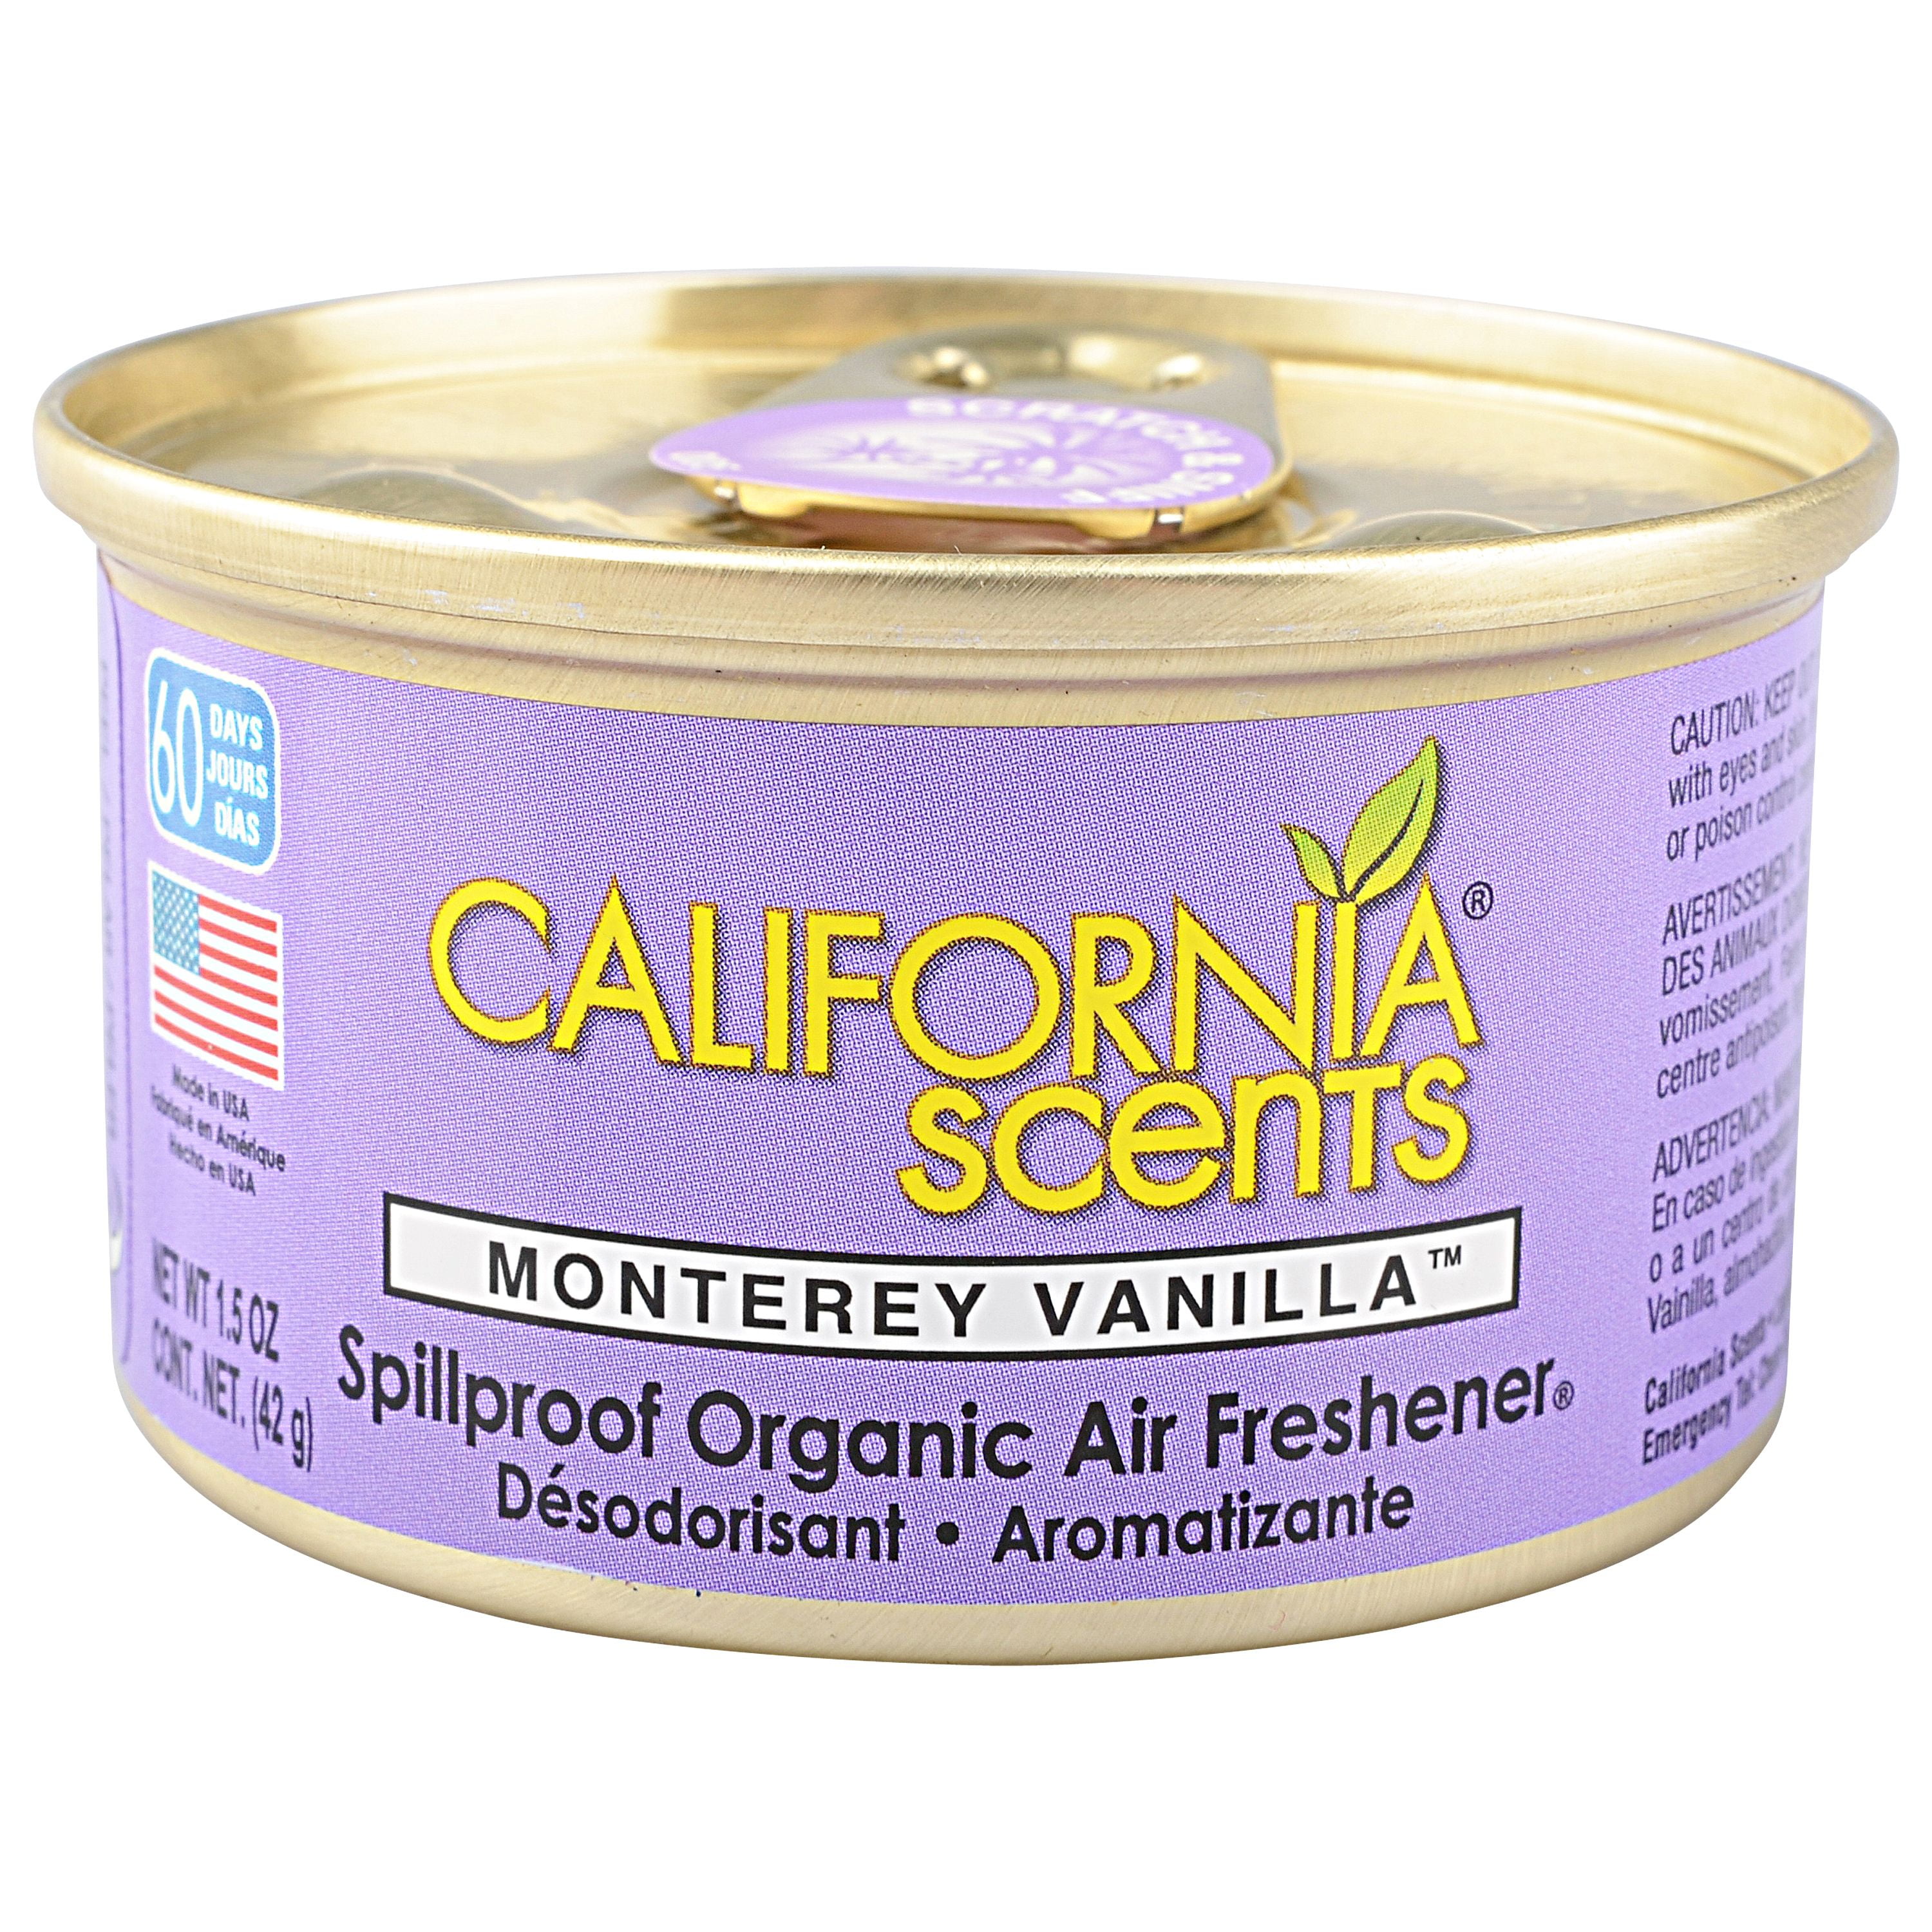 California Scents Monterey Vanilla Spillproof Organic Air Freshener, 1.5 Ounce